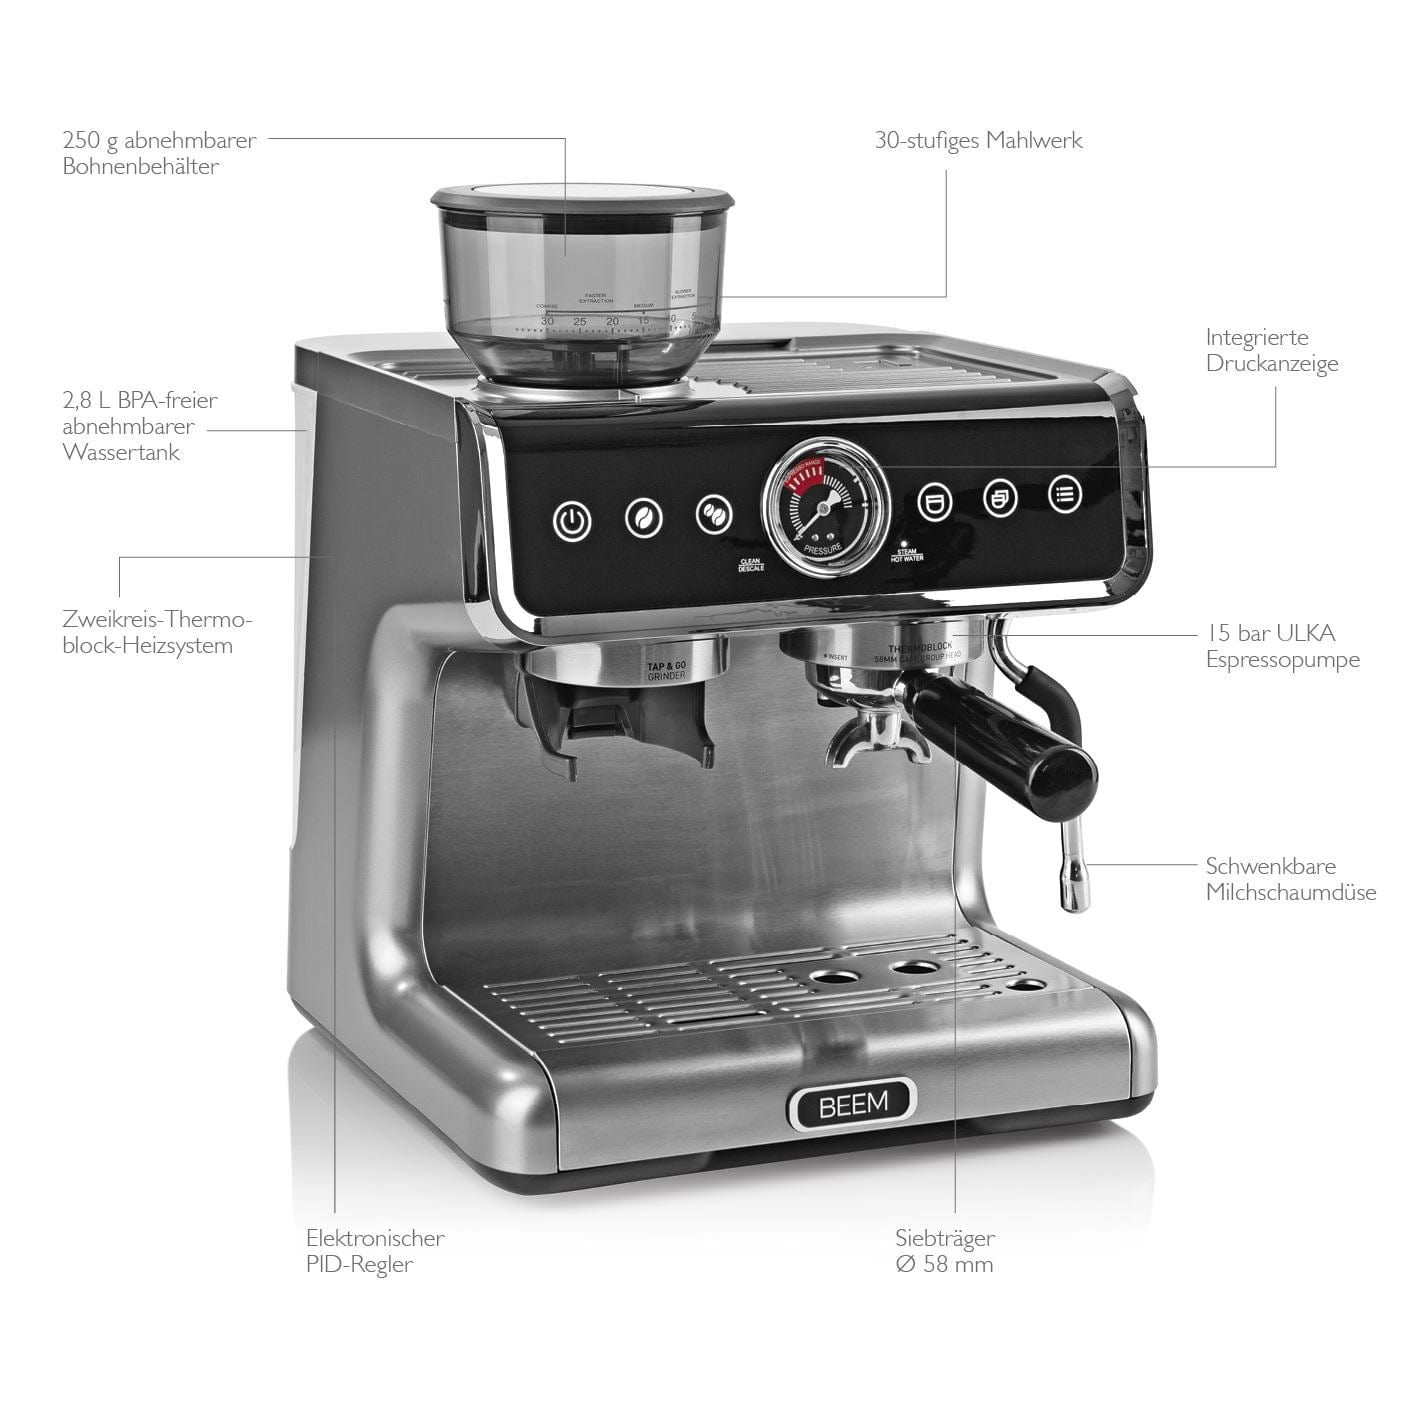 ESPRESSO-GRIND-PROFESSION Espresso Portafilter Machine with Grinder - 15 bar